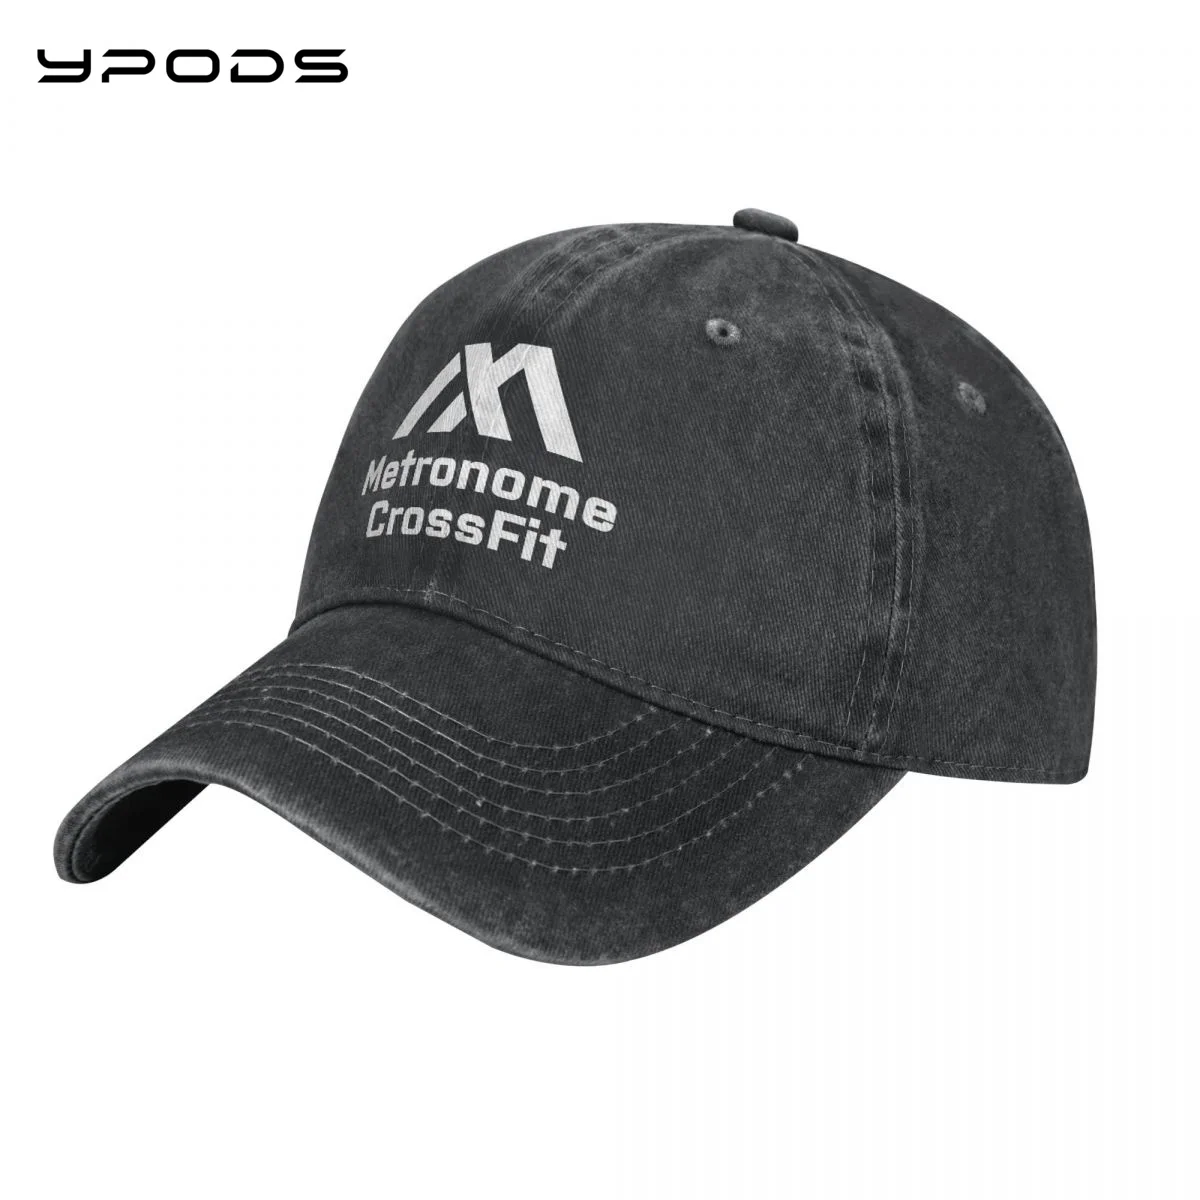 

CROSSFIt Vintage Baseball Cap Washable Cotton Adjustable Cap Hats For Men